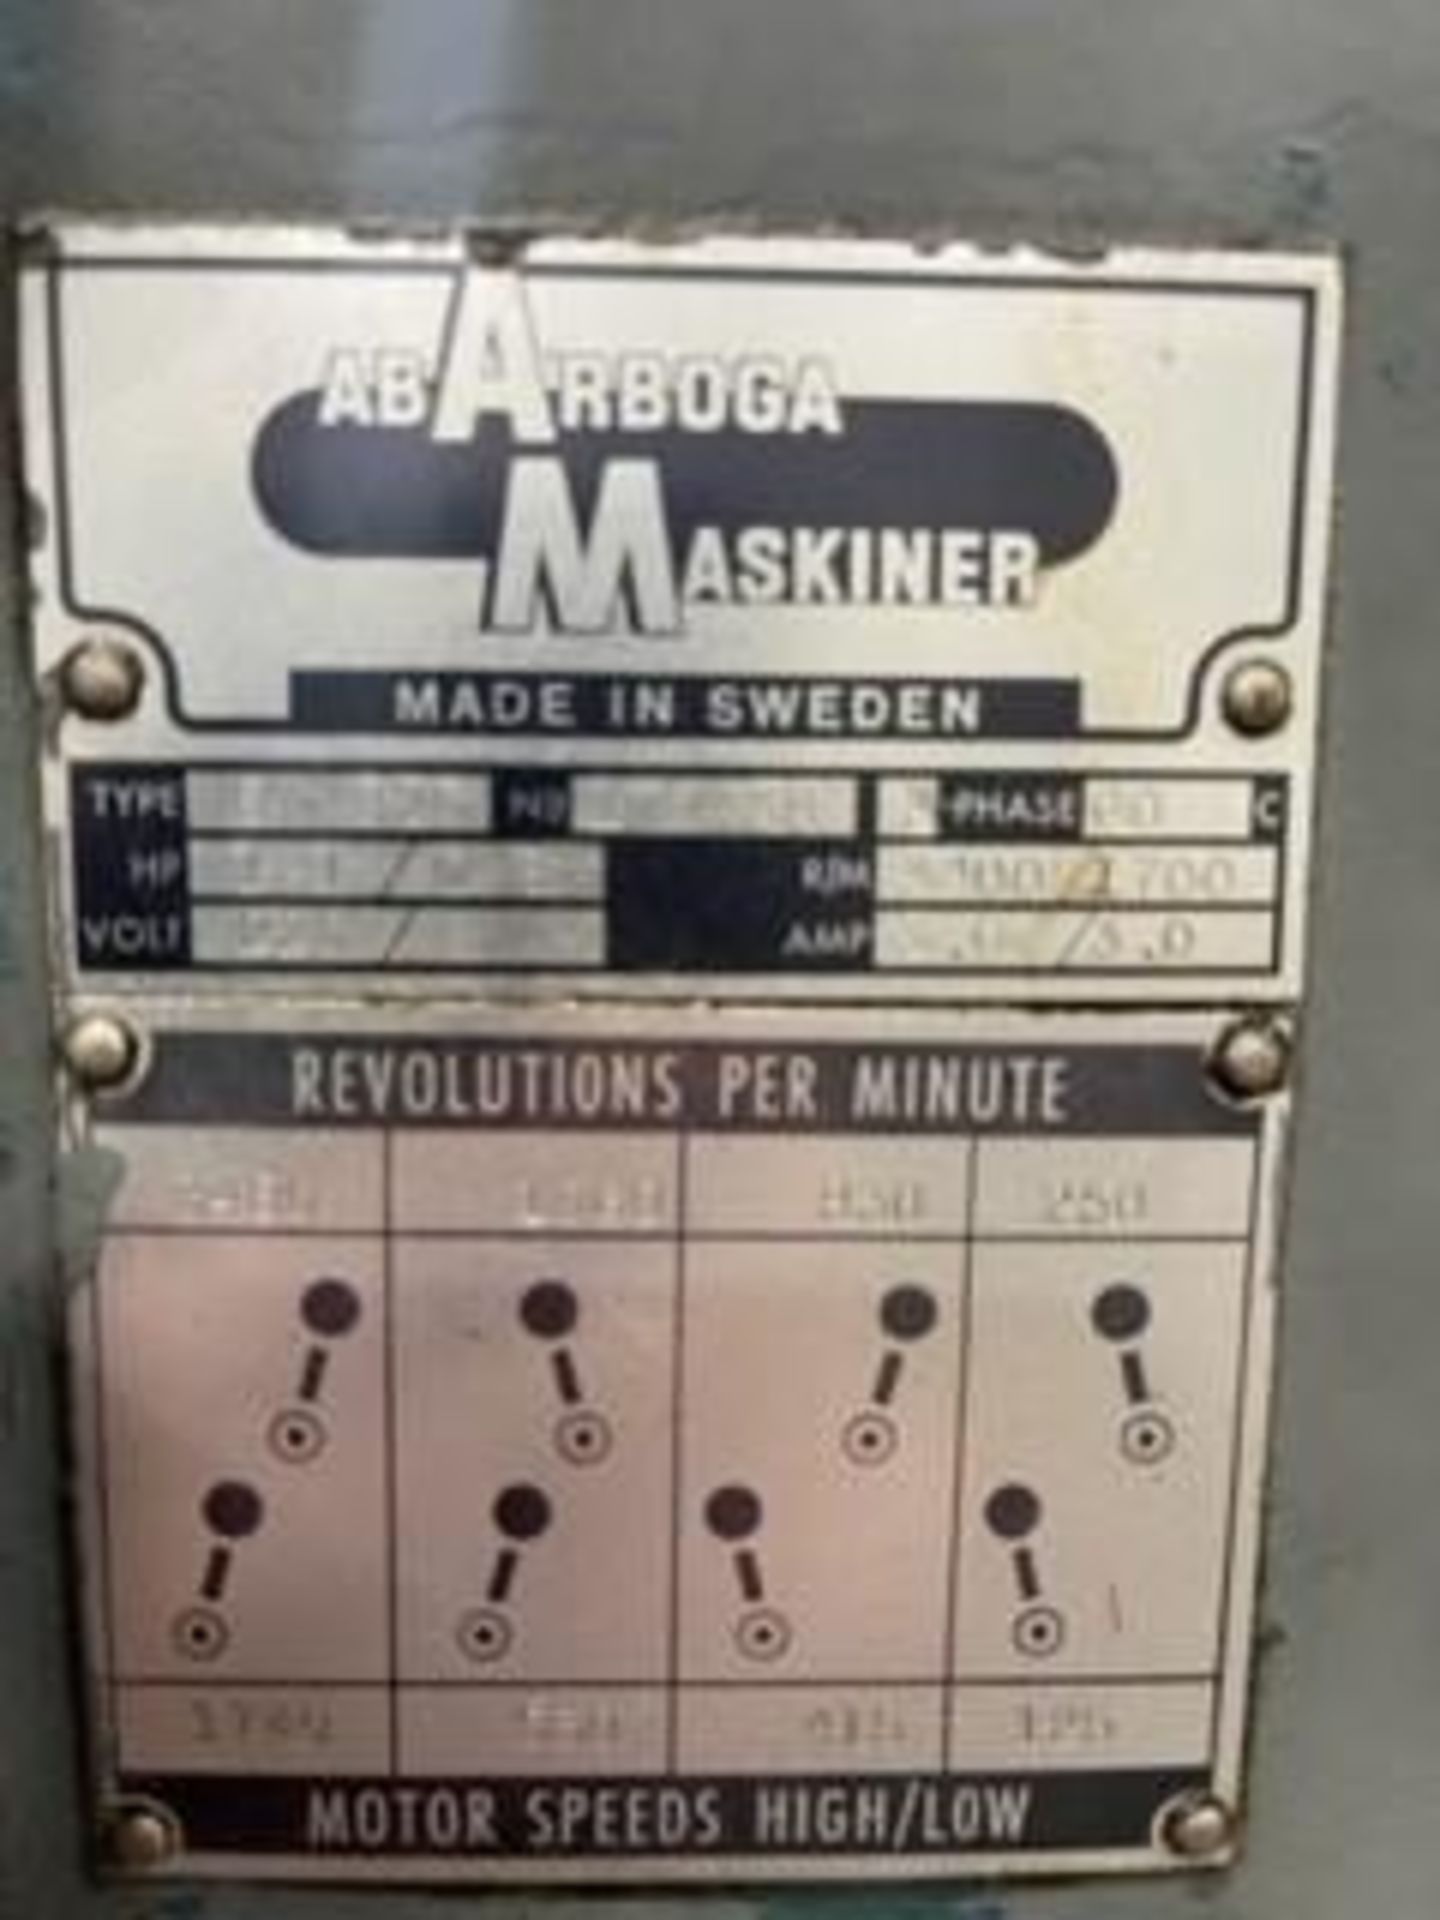 Abarboga Maskiner Drill Press - Image 2 of 6